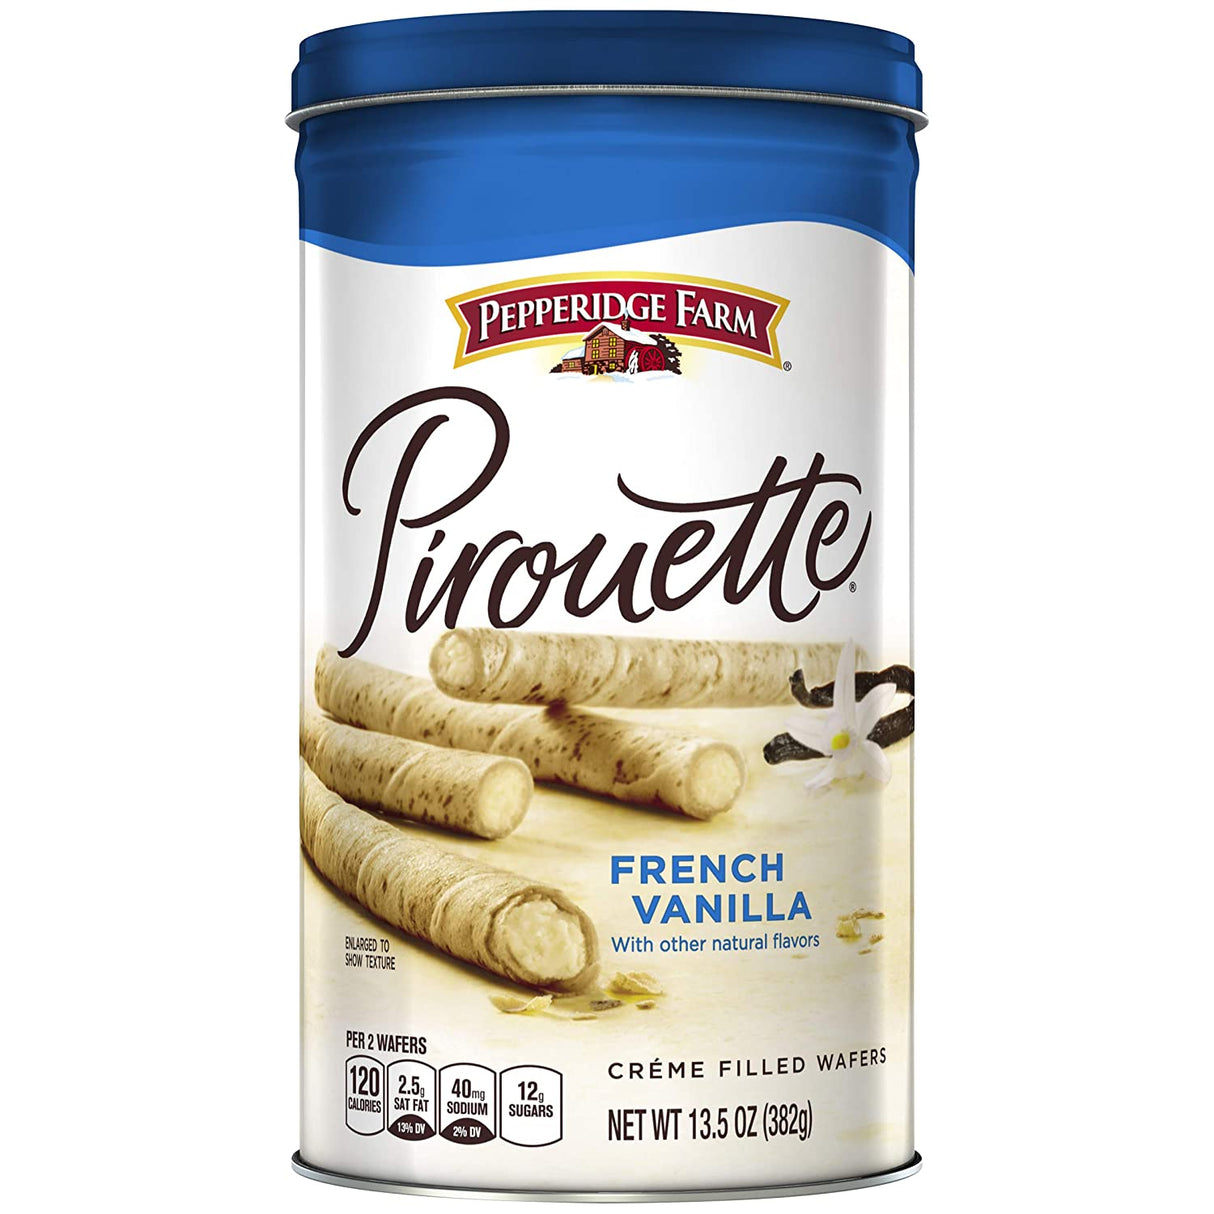 Pepperidge Farm Pirouette French Vanilla (382g)